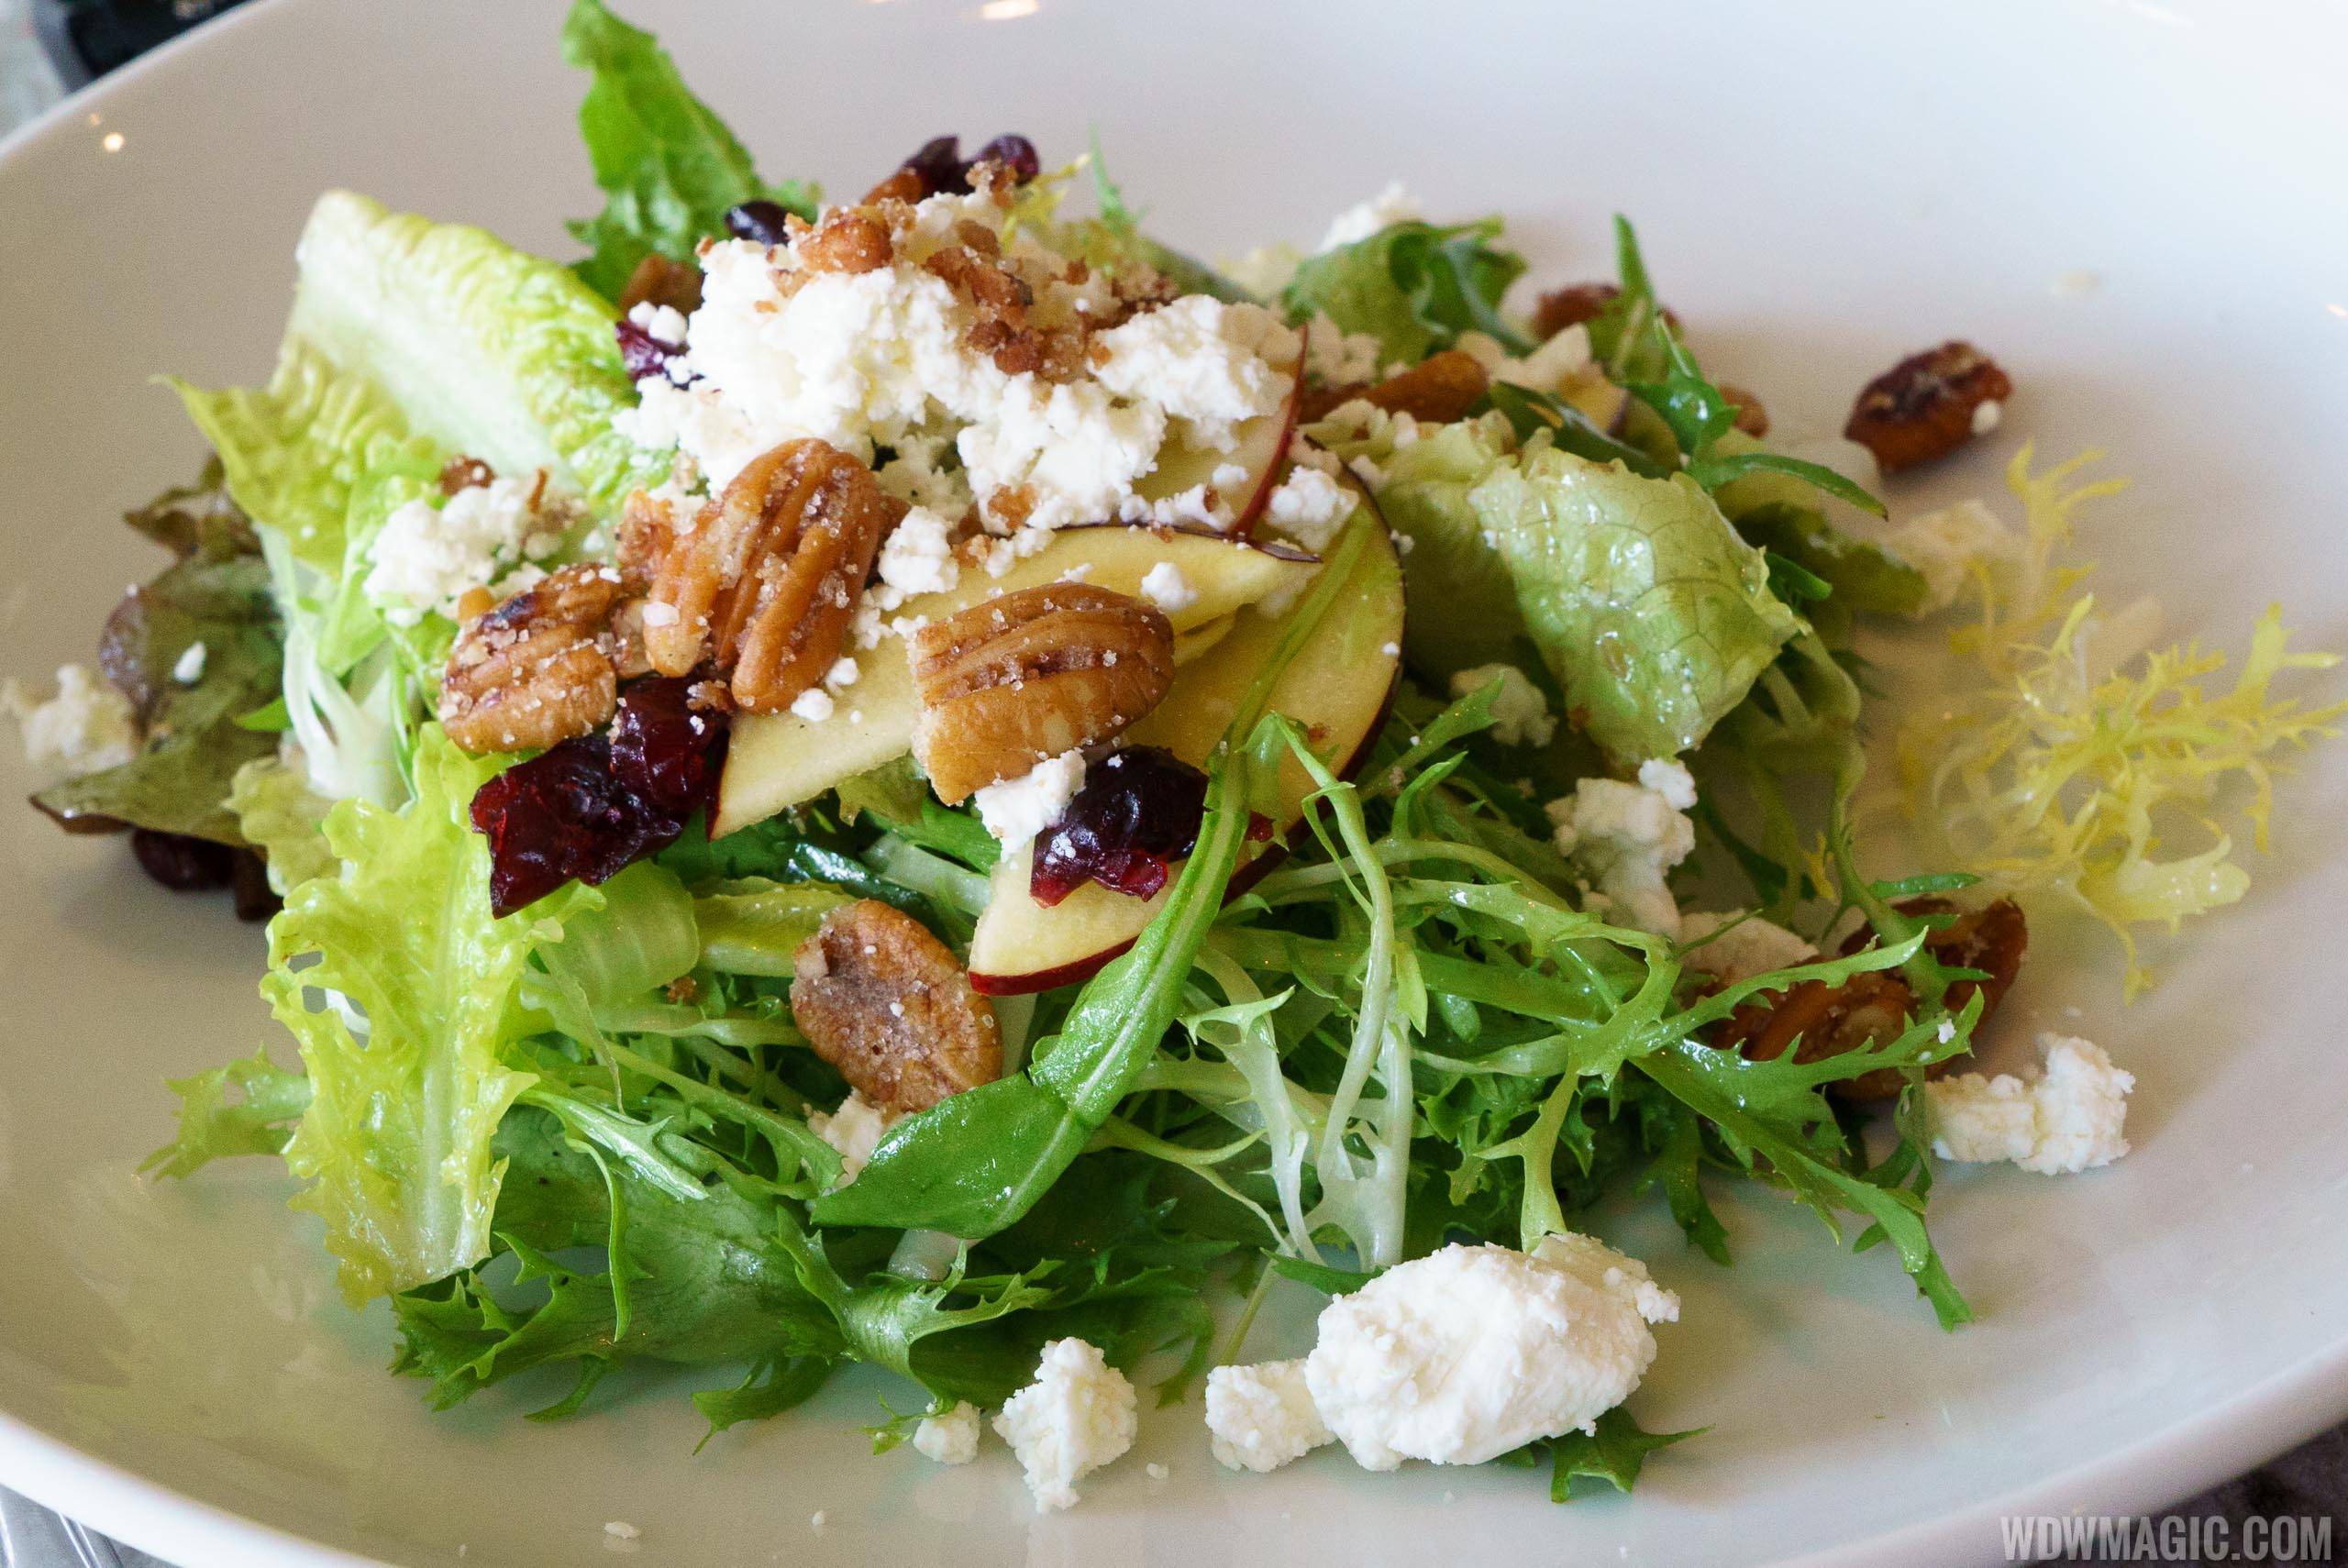 Grand Floridian Cafe lunch - Seasonal Salad